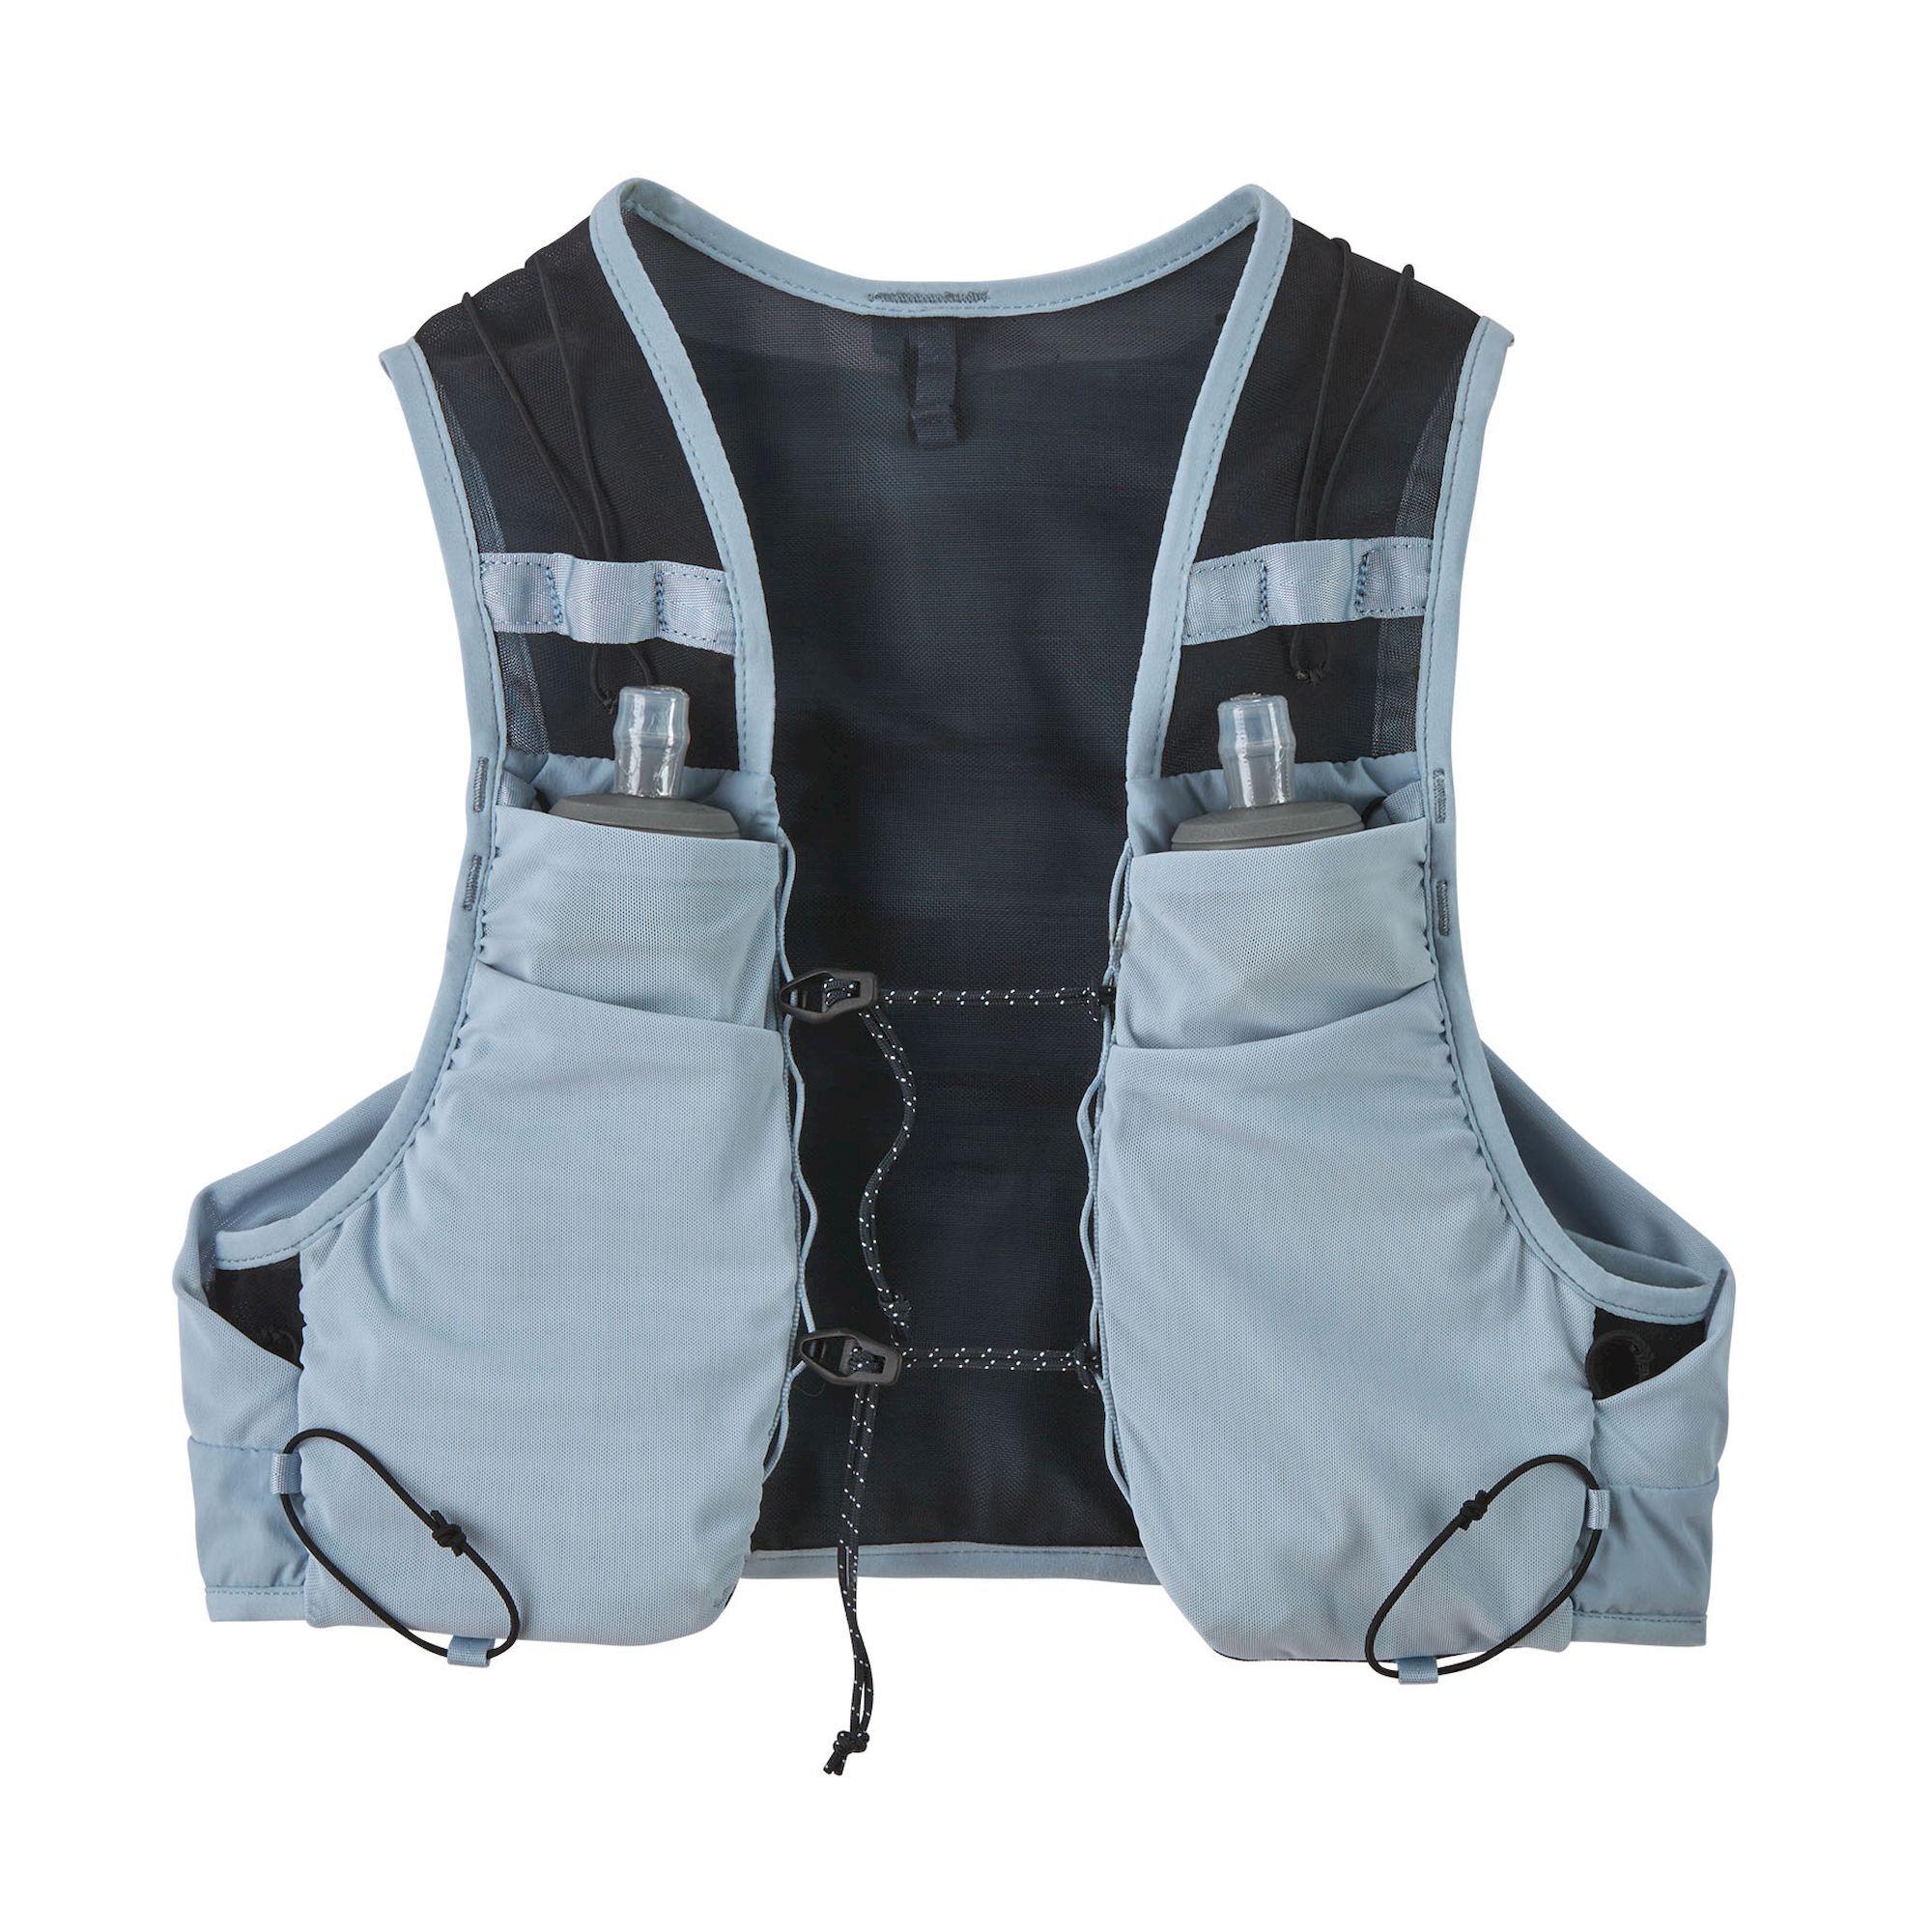 Patagonia Slope Runner Endurance Vest 3L - Sac à dos d'hydratation